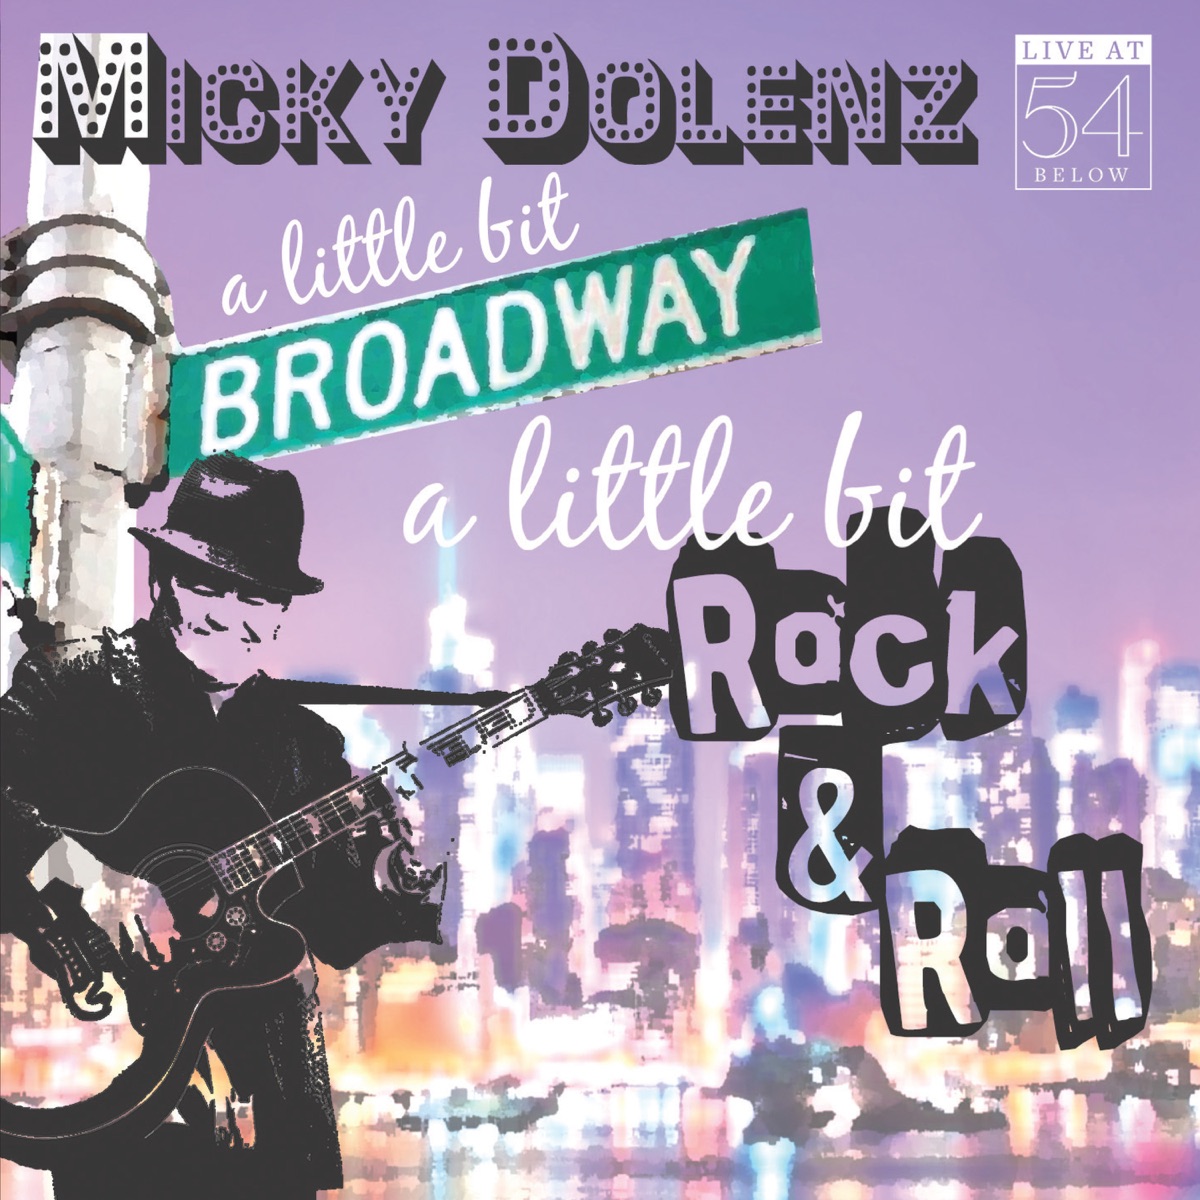 Micky Dolenz – Dolenz Sings R.E.M.